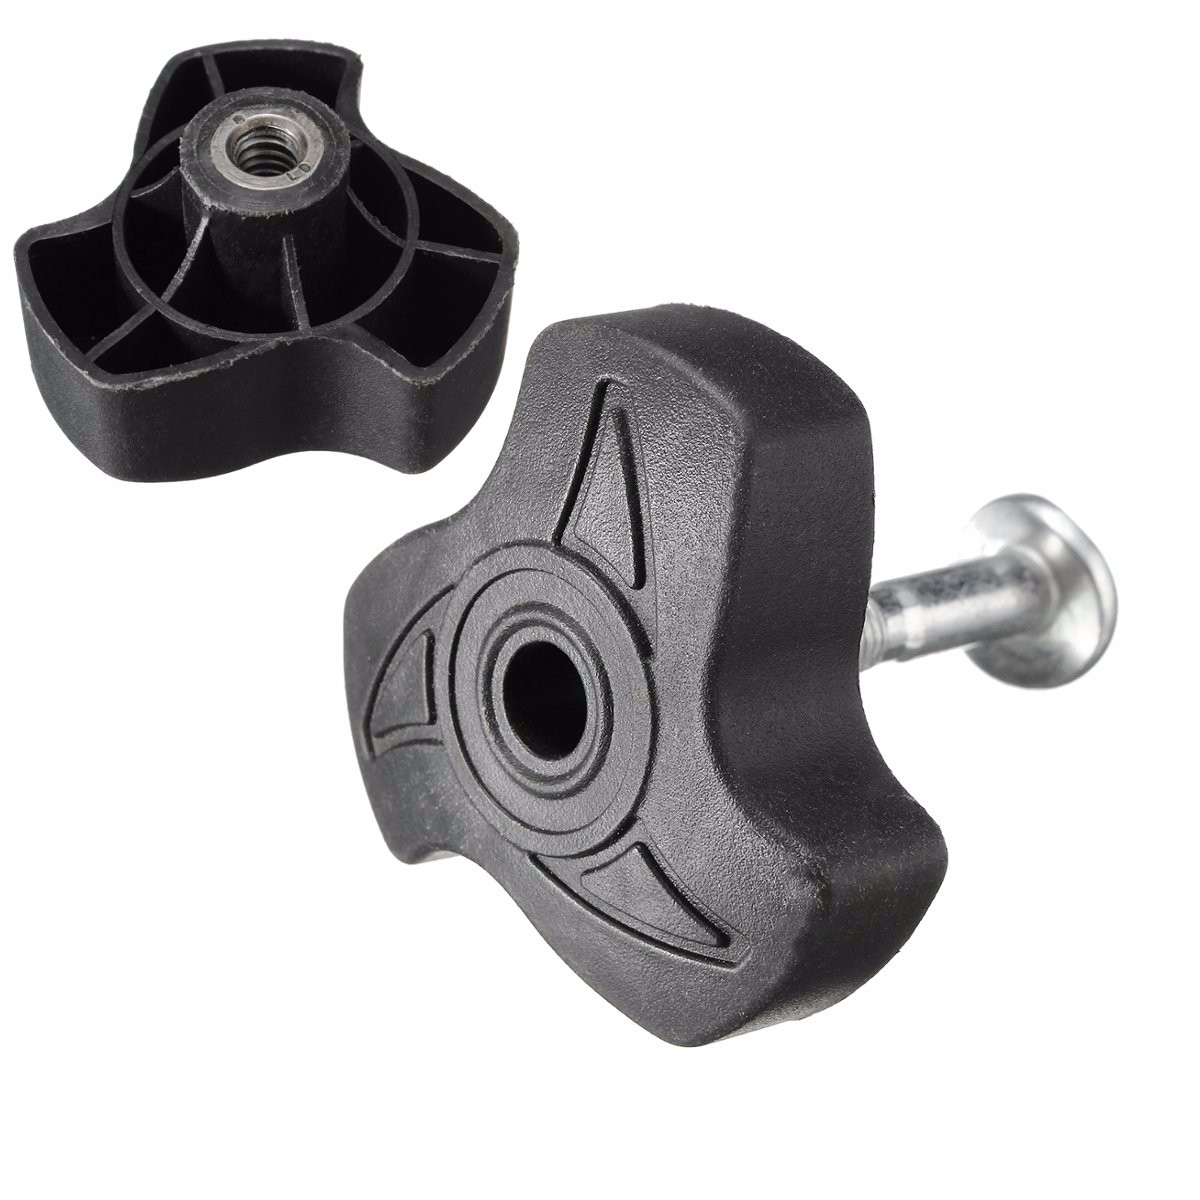 2pcs 5pcs Handle Bar Fixings Wheel Knob 8mm Nut Bolts Screws Thread 35mm For Many Lawnmowers Lawnmower